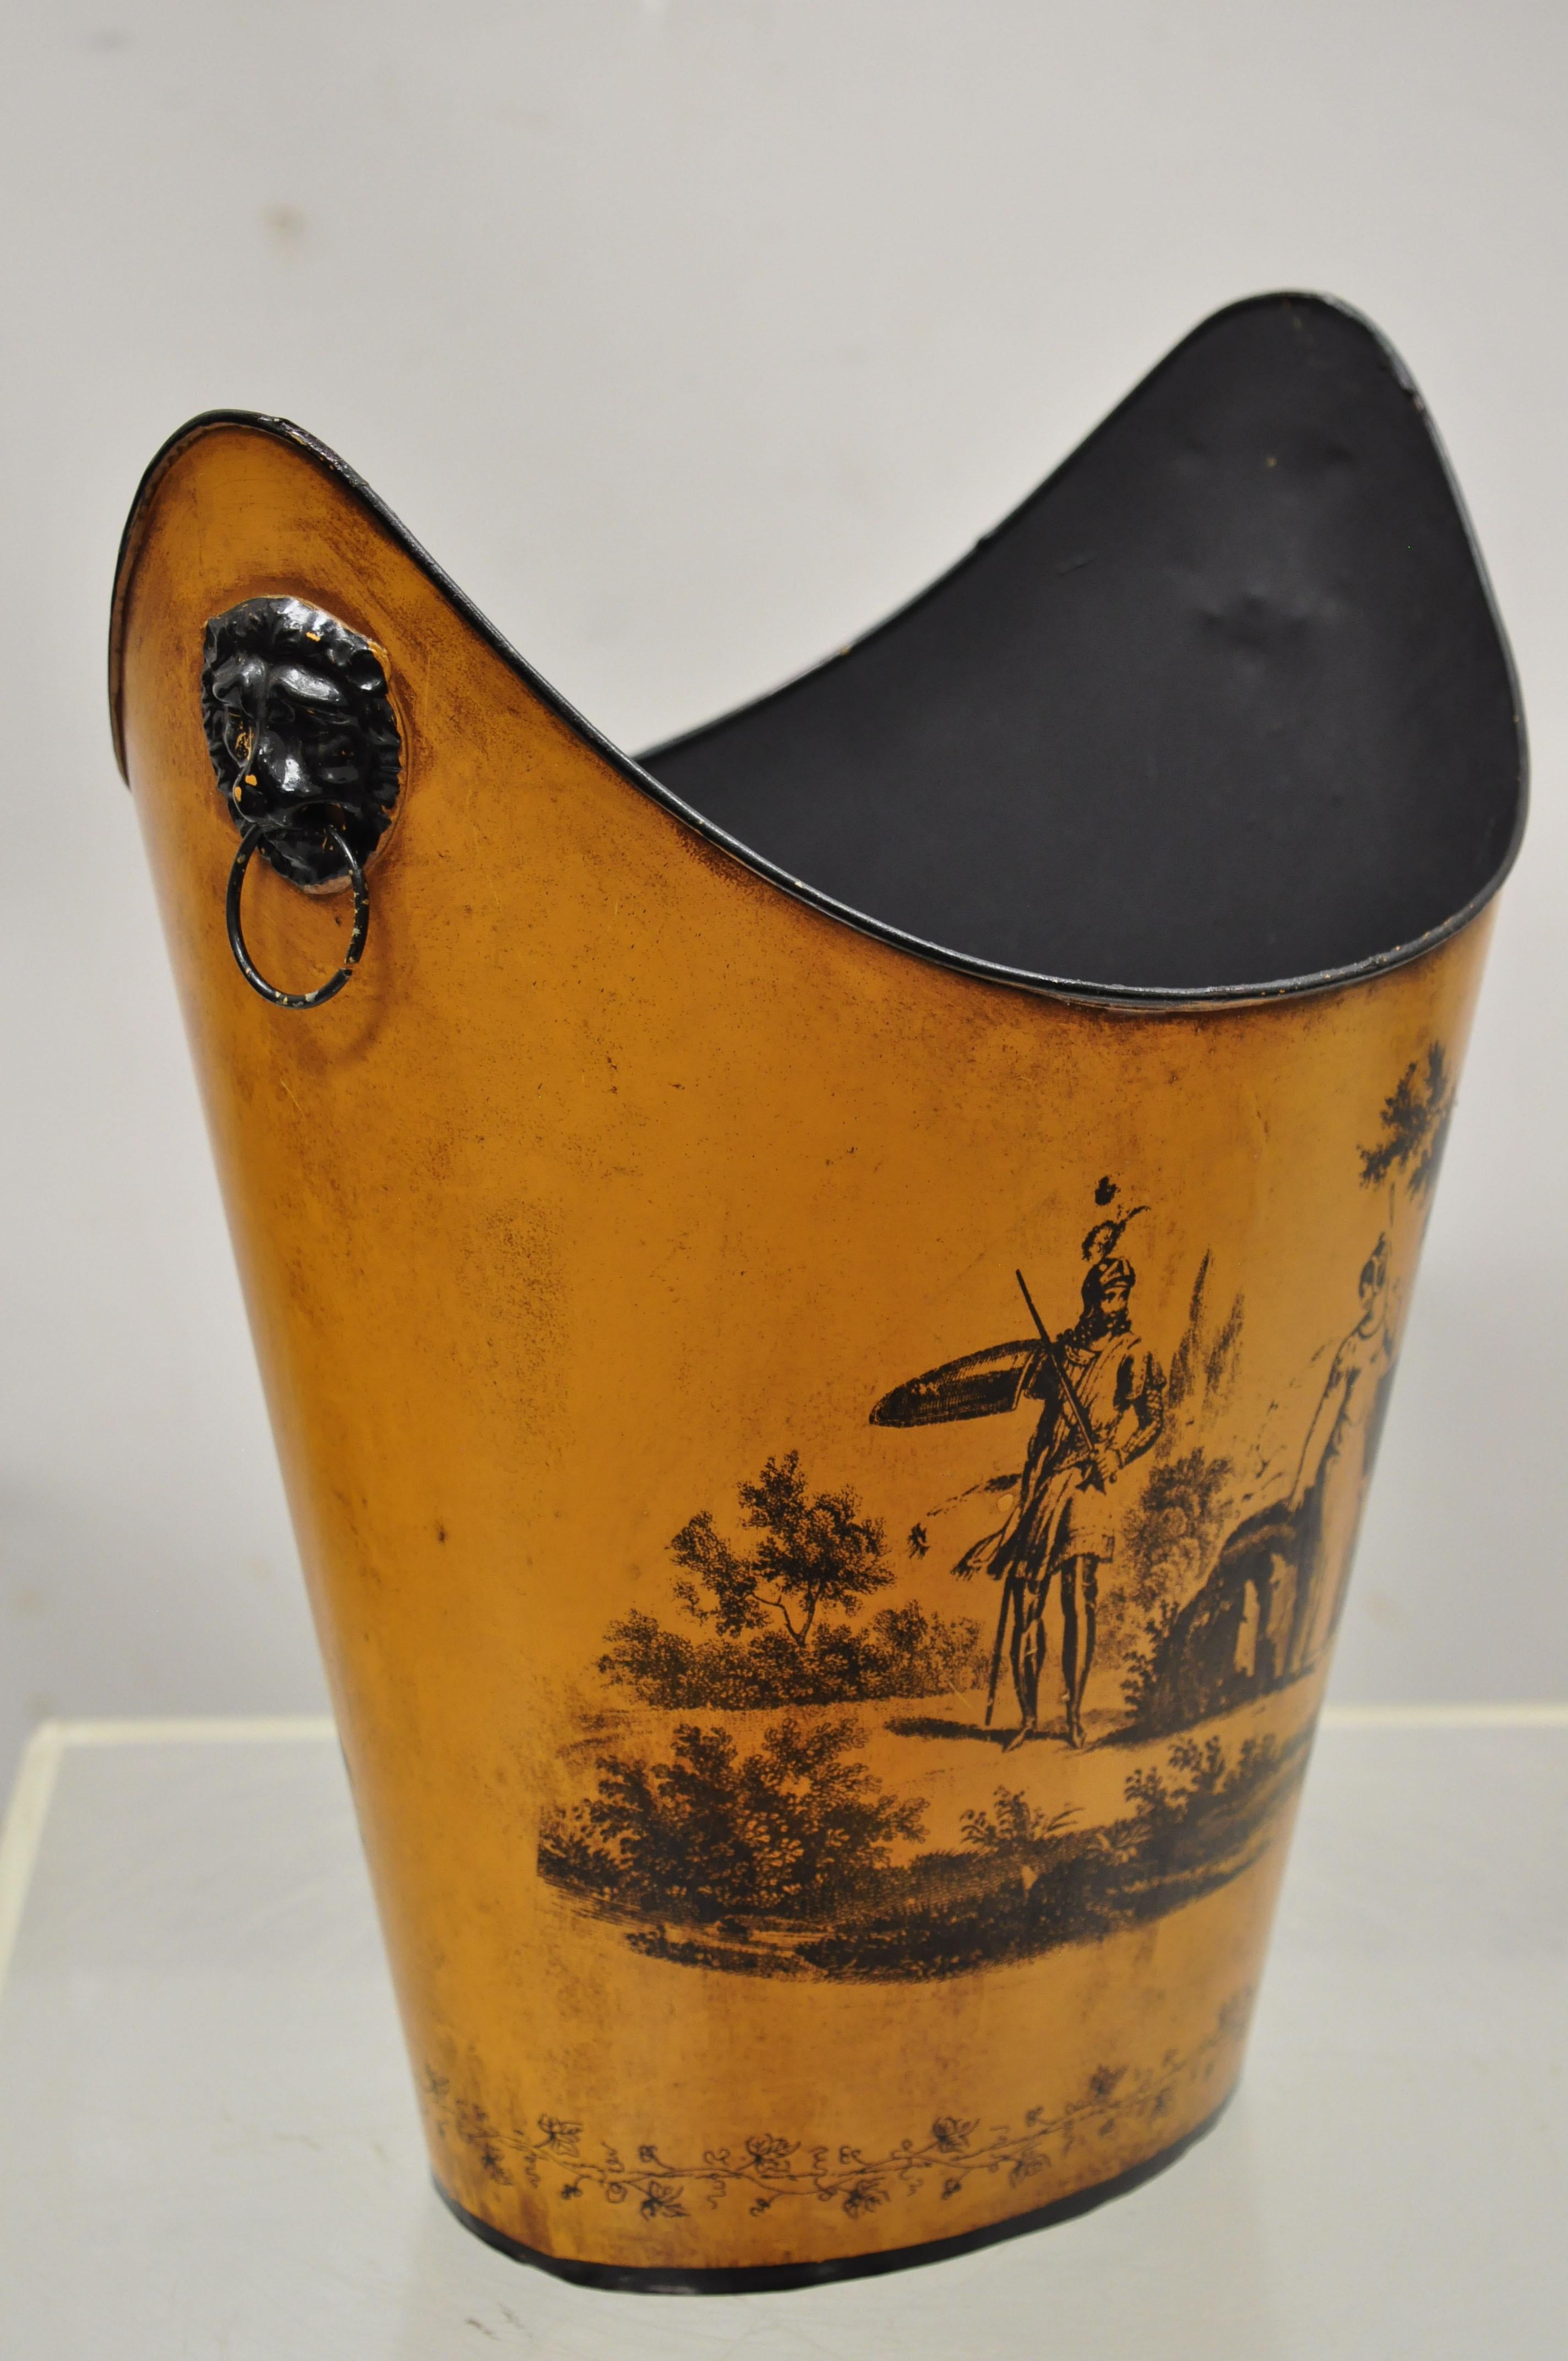 Vintage Italian Hollywood Regency tole metal orange wastebasket trashcan. Item features lion drop pulls, decorated front and back, 